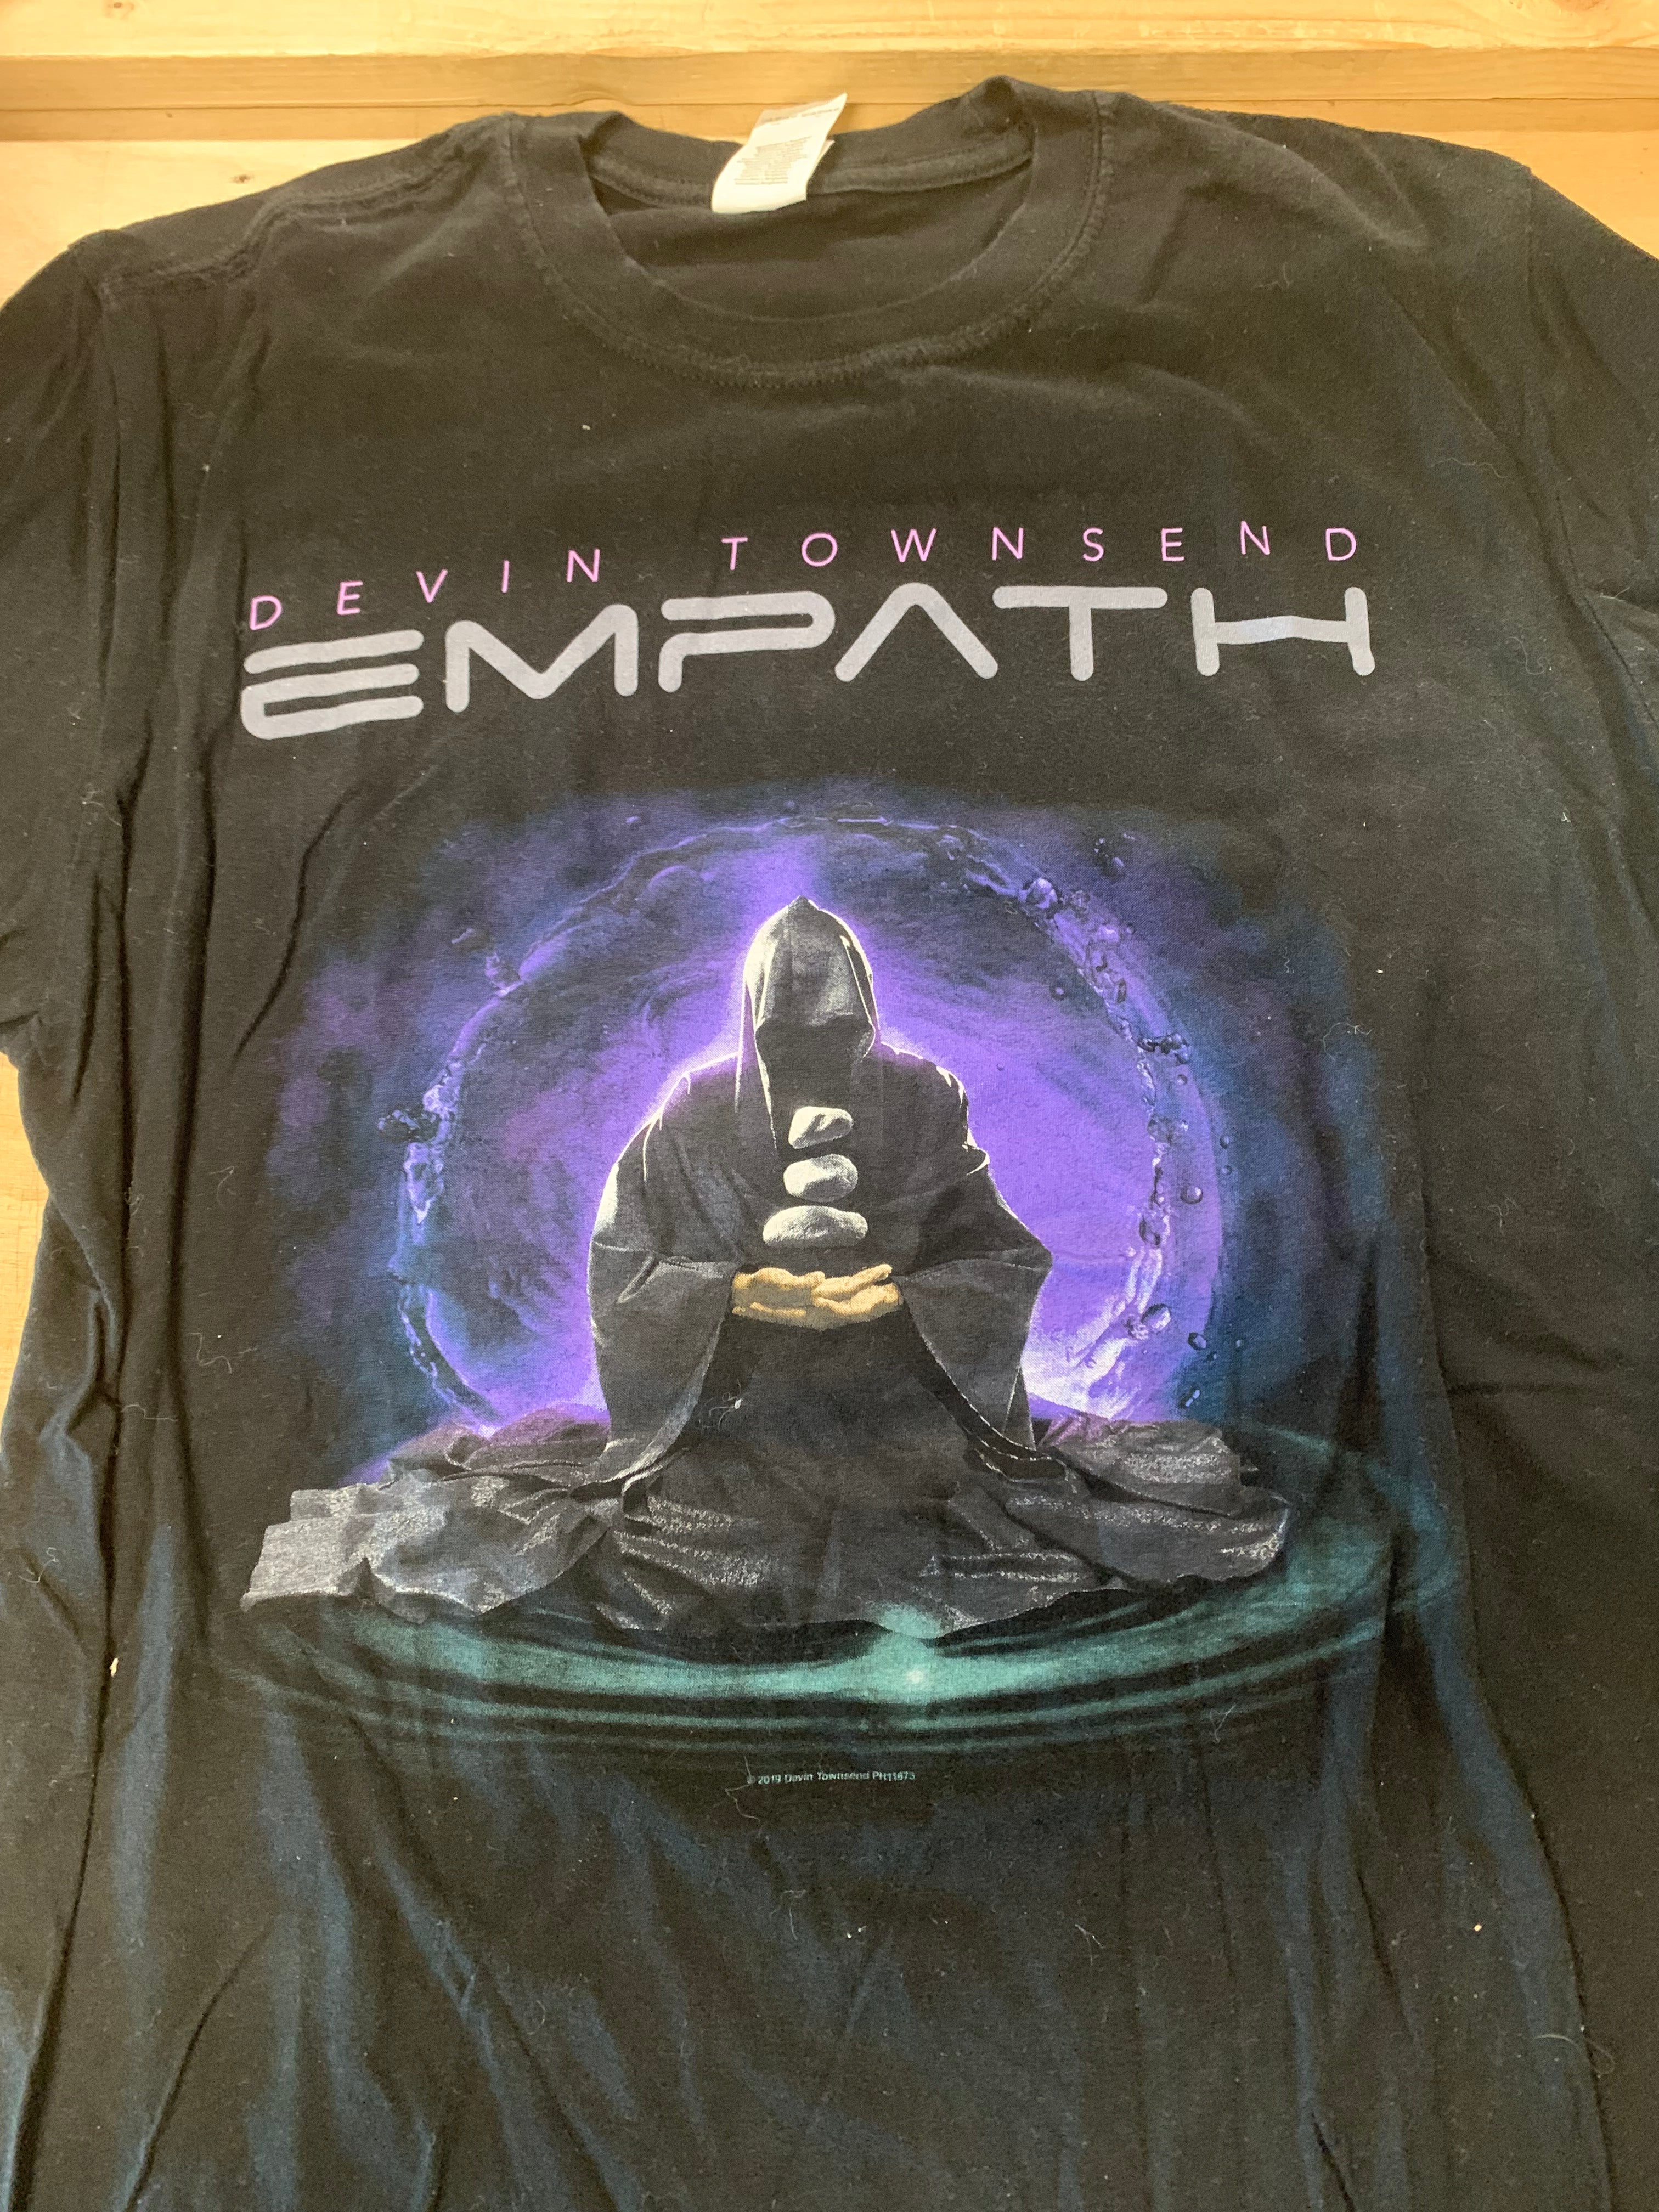 Devin Townsend Empath T-Shirt, Black, M